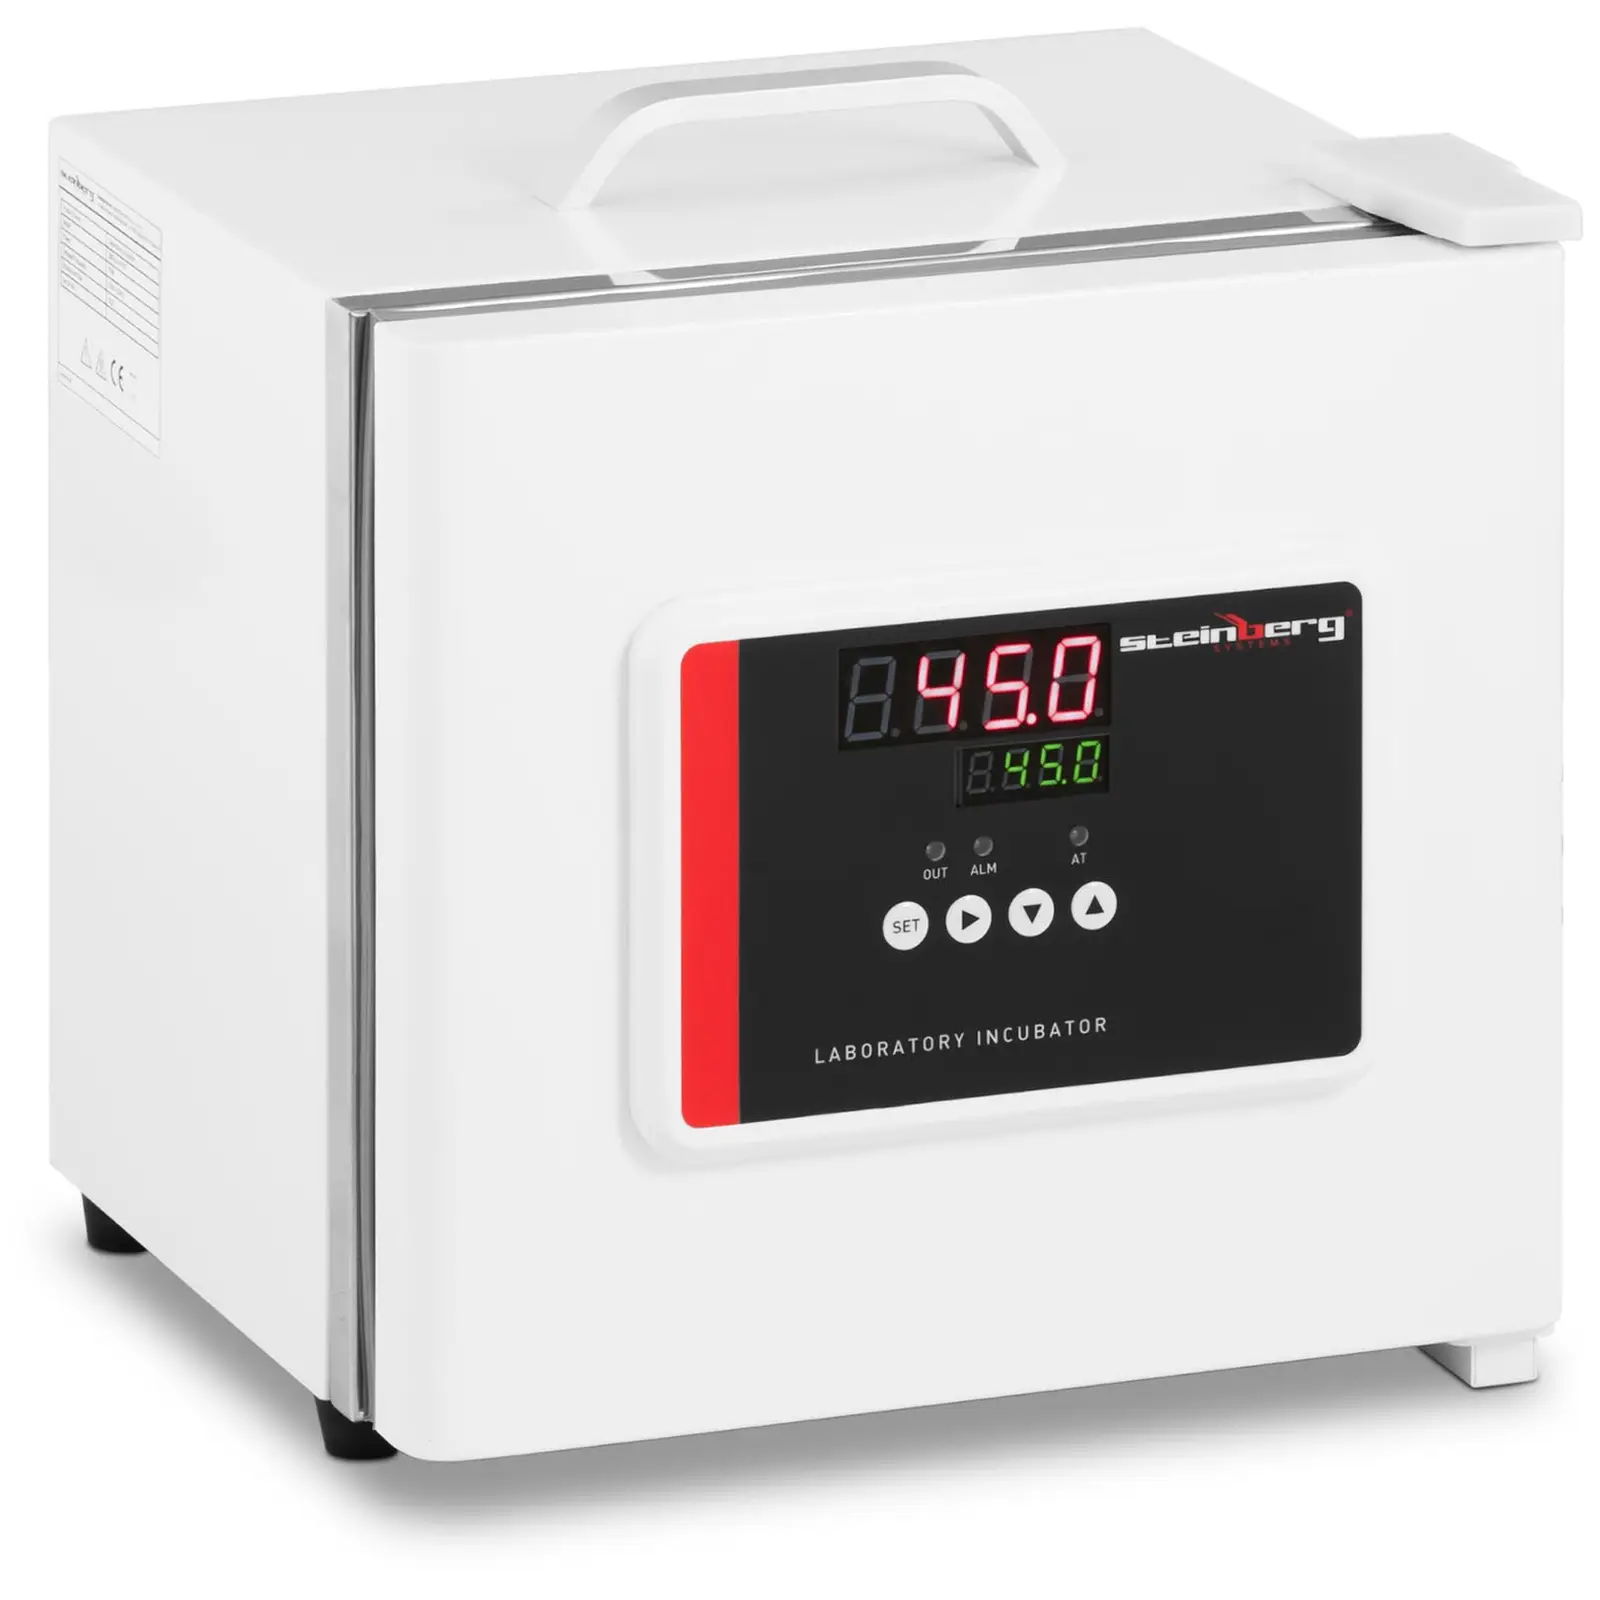 Laboratory Incubator - up to 45 °C - 7.5 L - 12 V DC